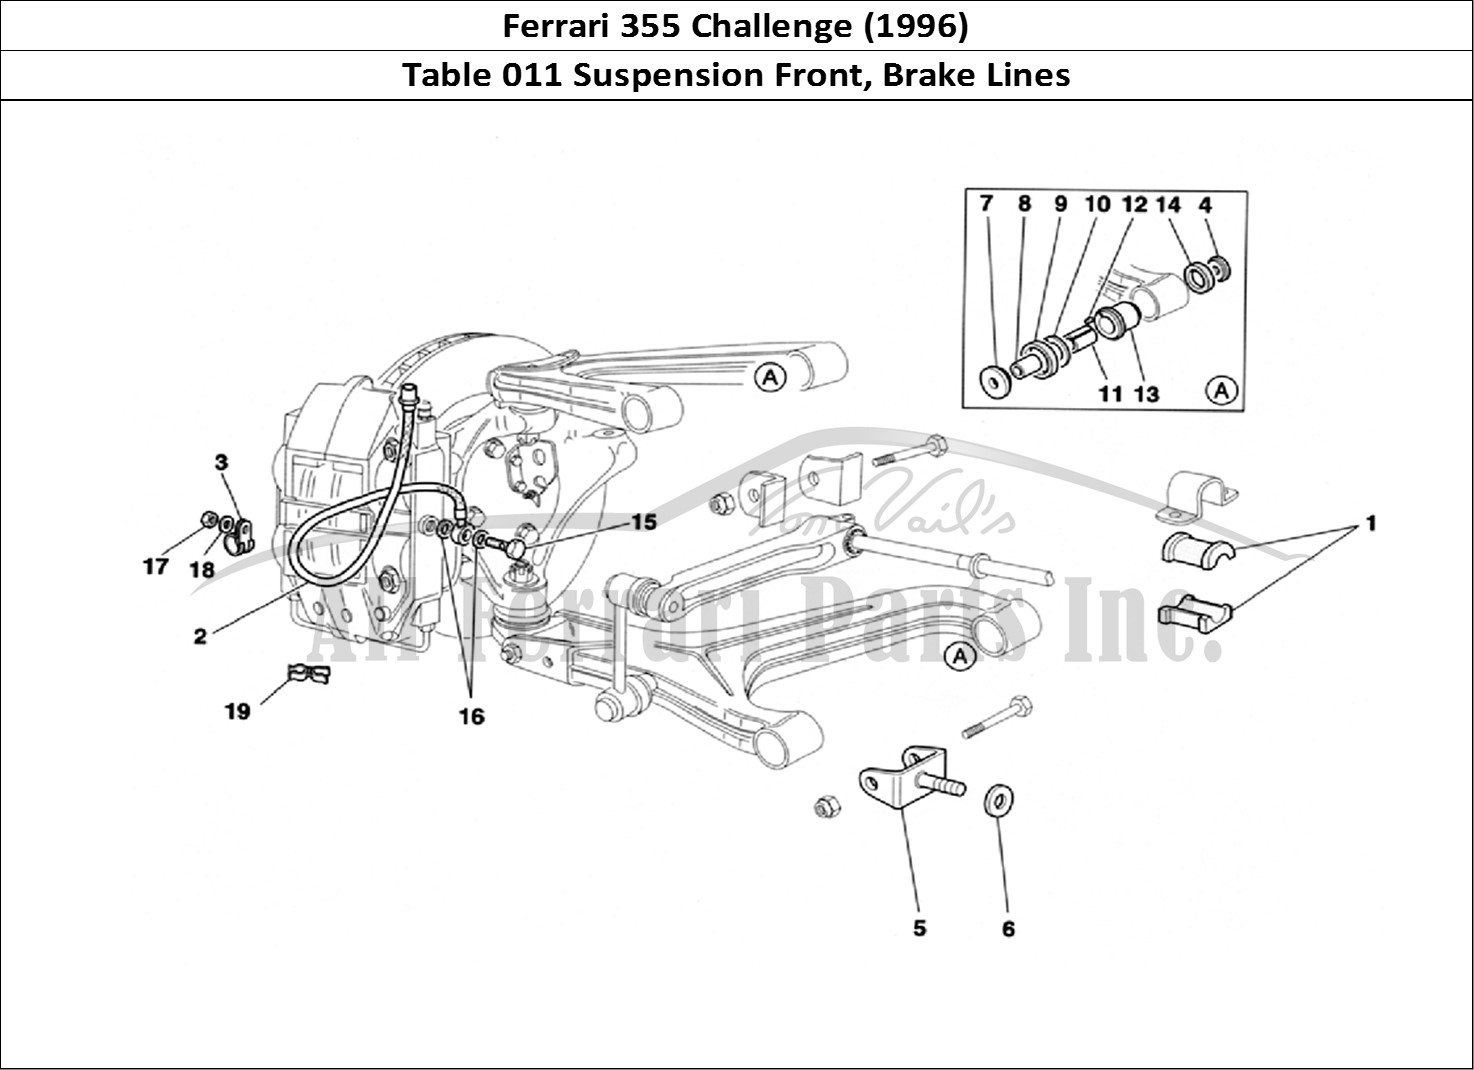 Ferrari Parts Ferrari 355 Challenge (1996) Page 011 Front Suspension and Brak